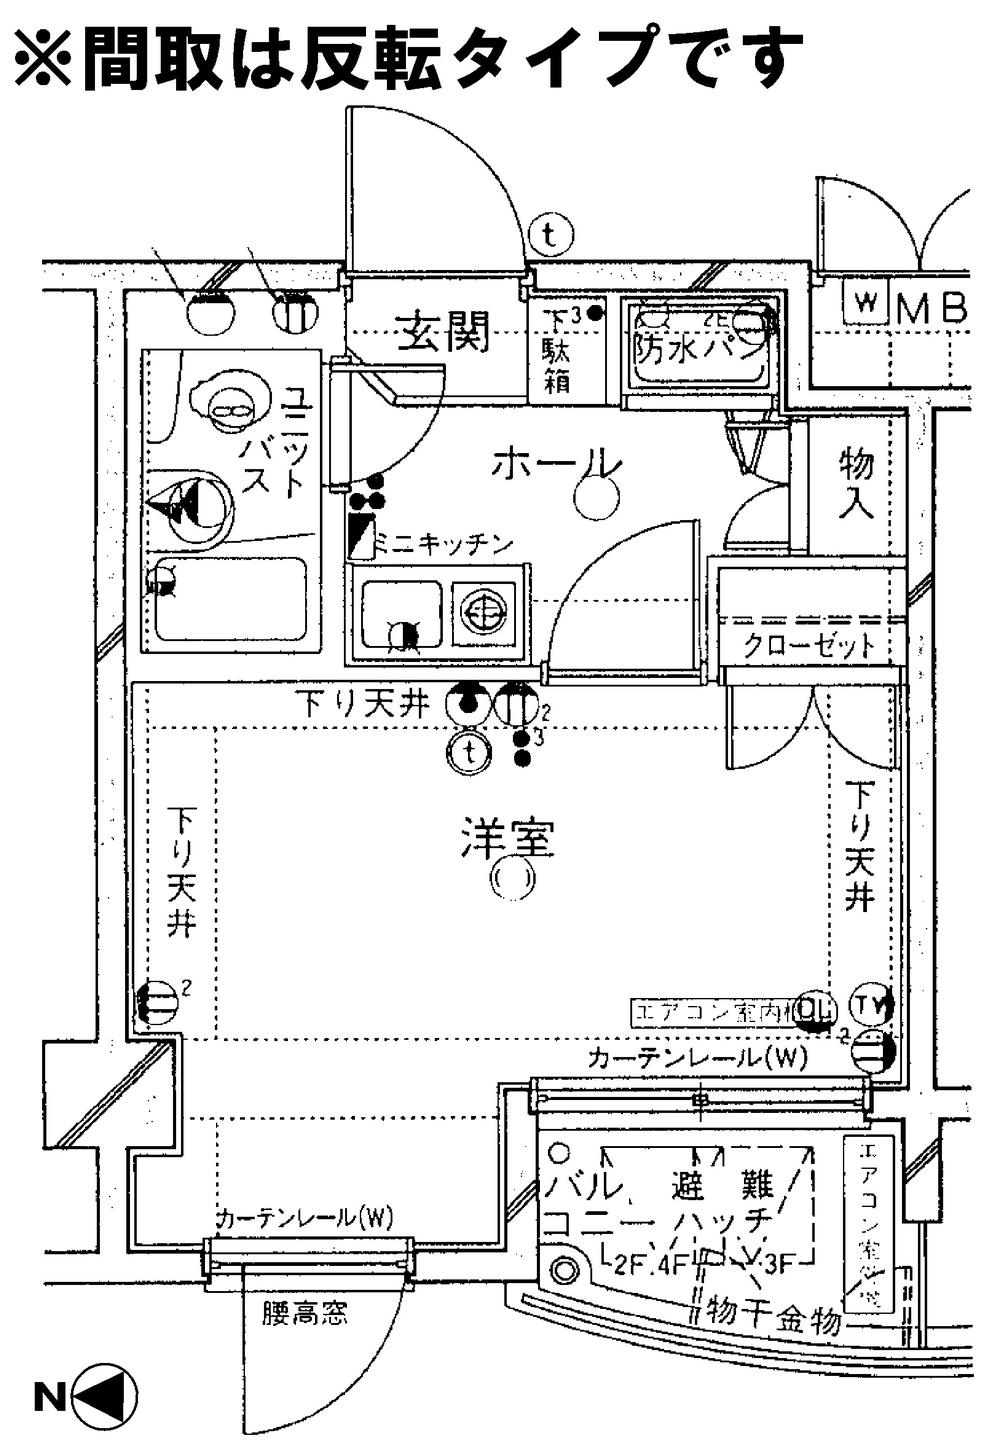 Floor plan. 1K, Price 7.5 million yen, Footprint 18.2 sq m , Balcony area 2.36 sq m Mato is the inverting type